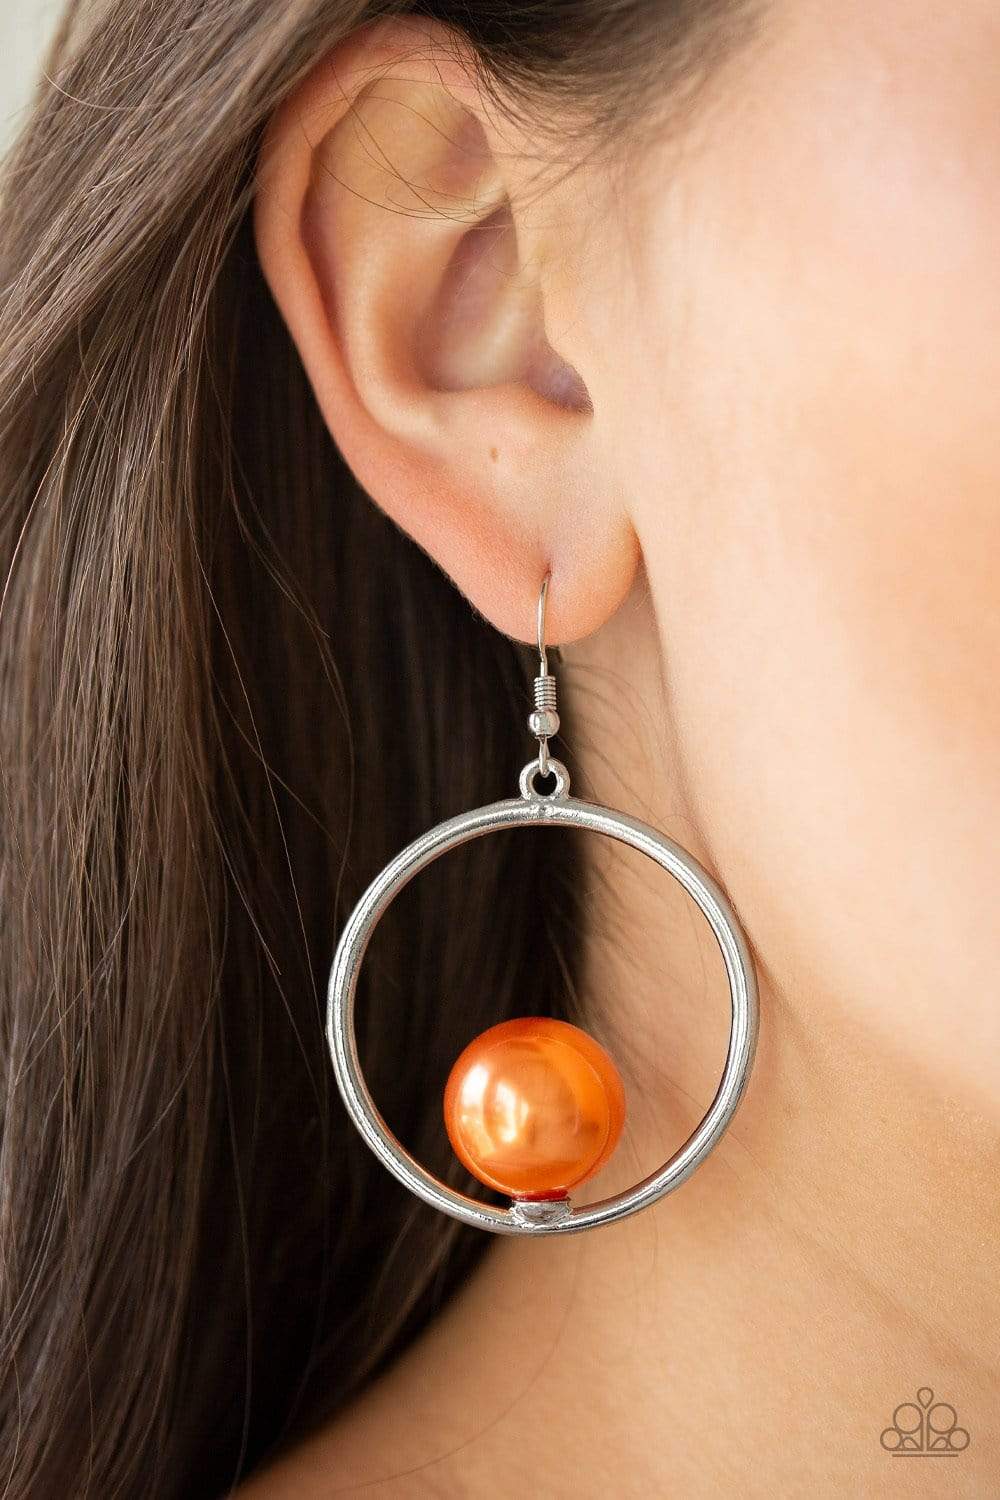 Solitaire REFINEMENT - Orange - Paparazzi Earrings